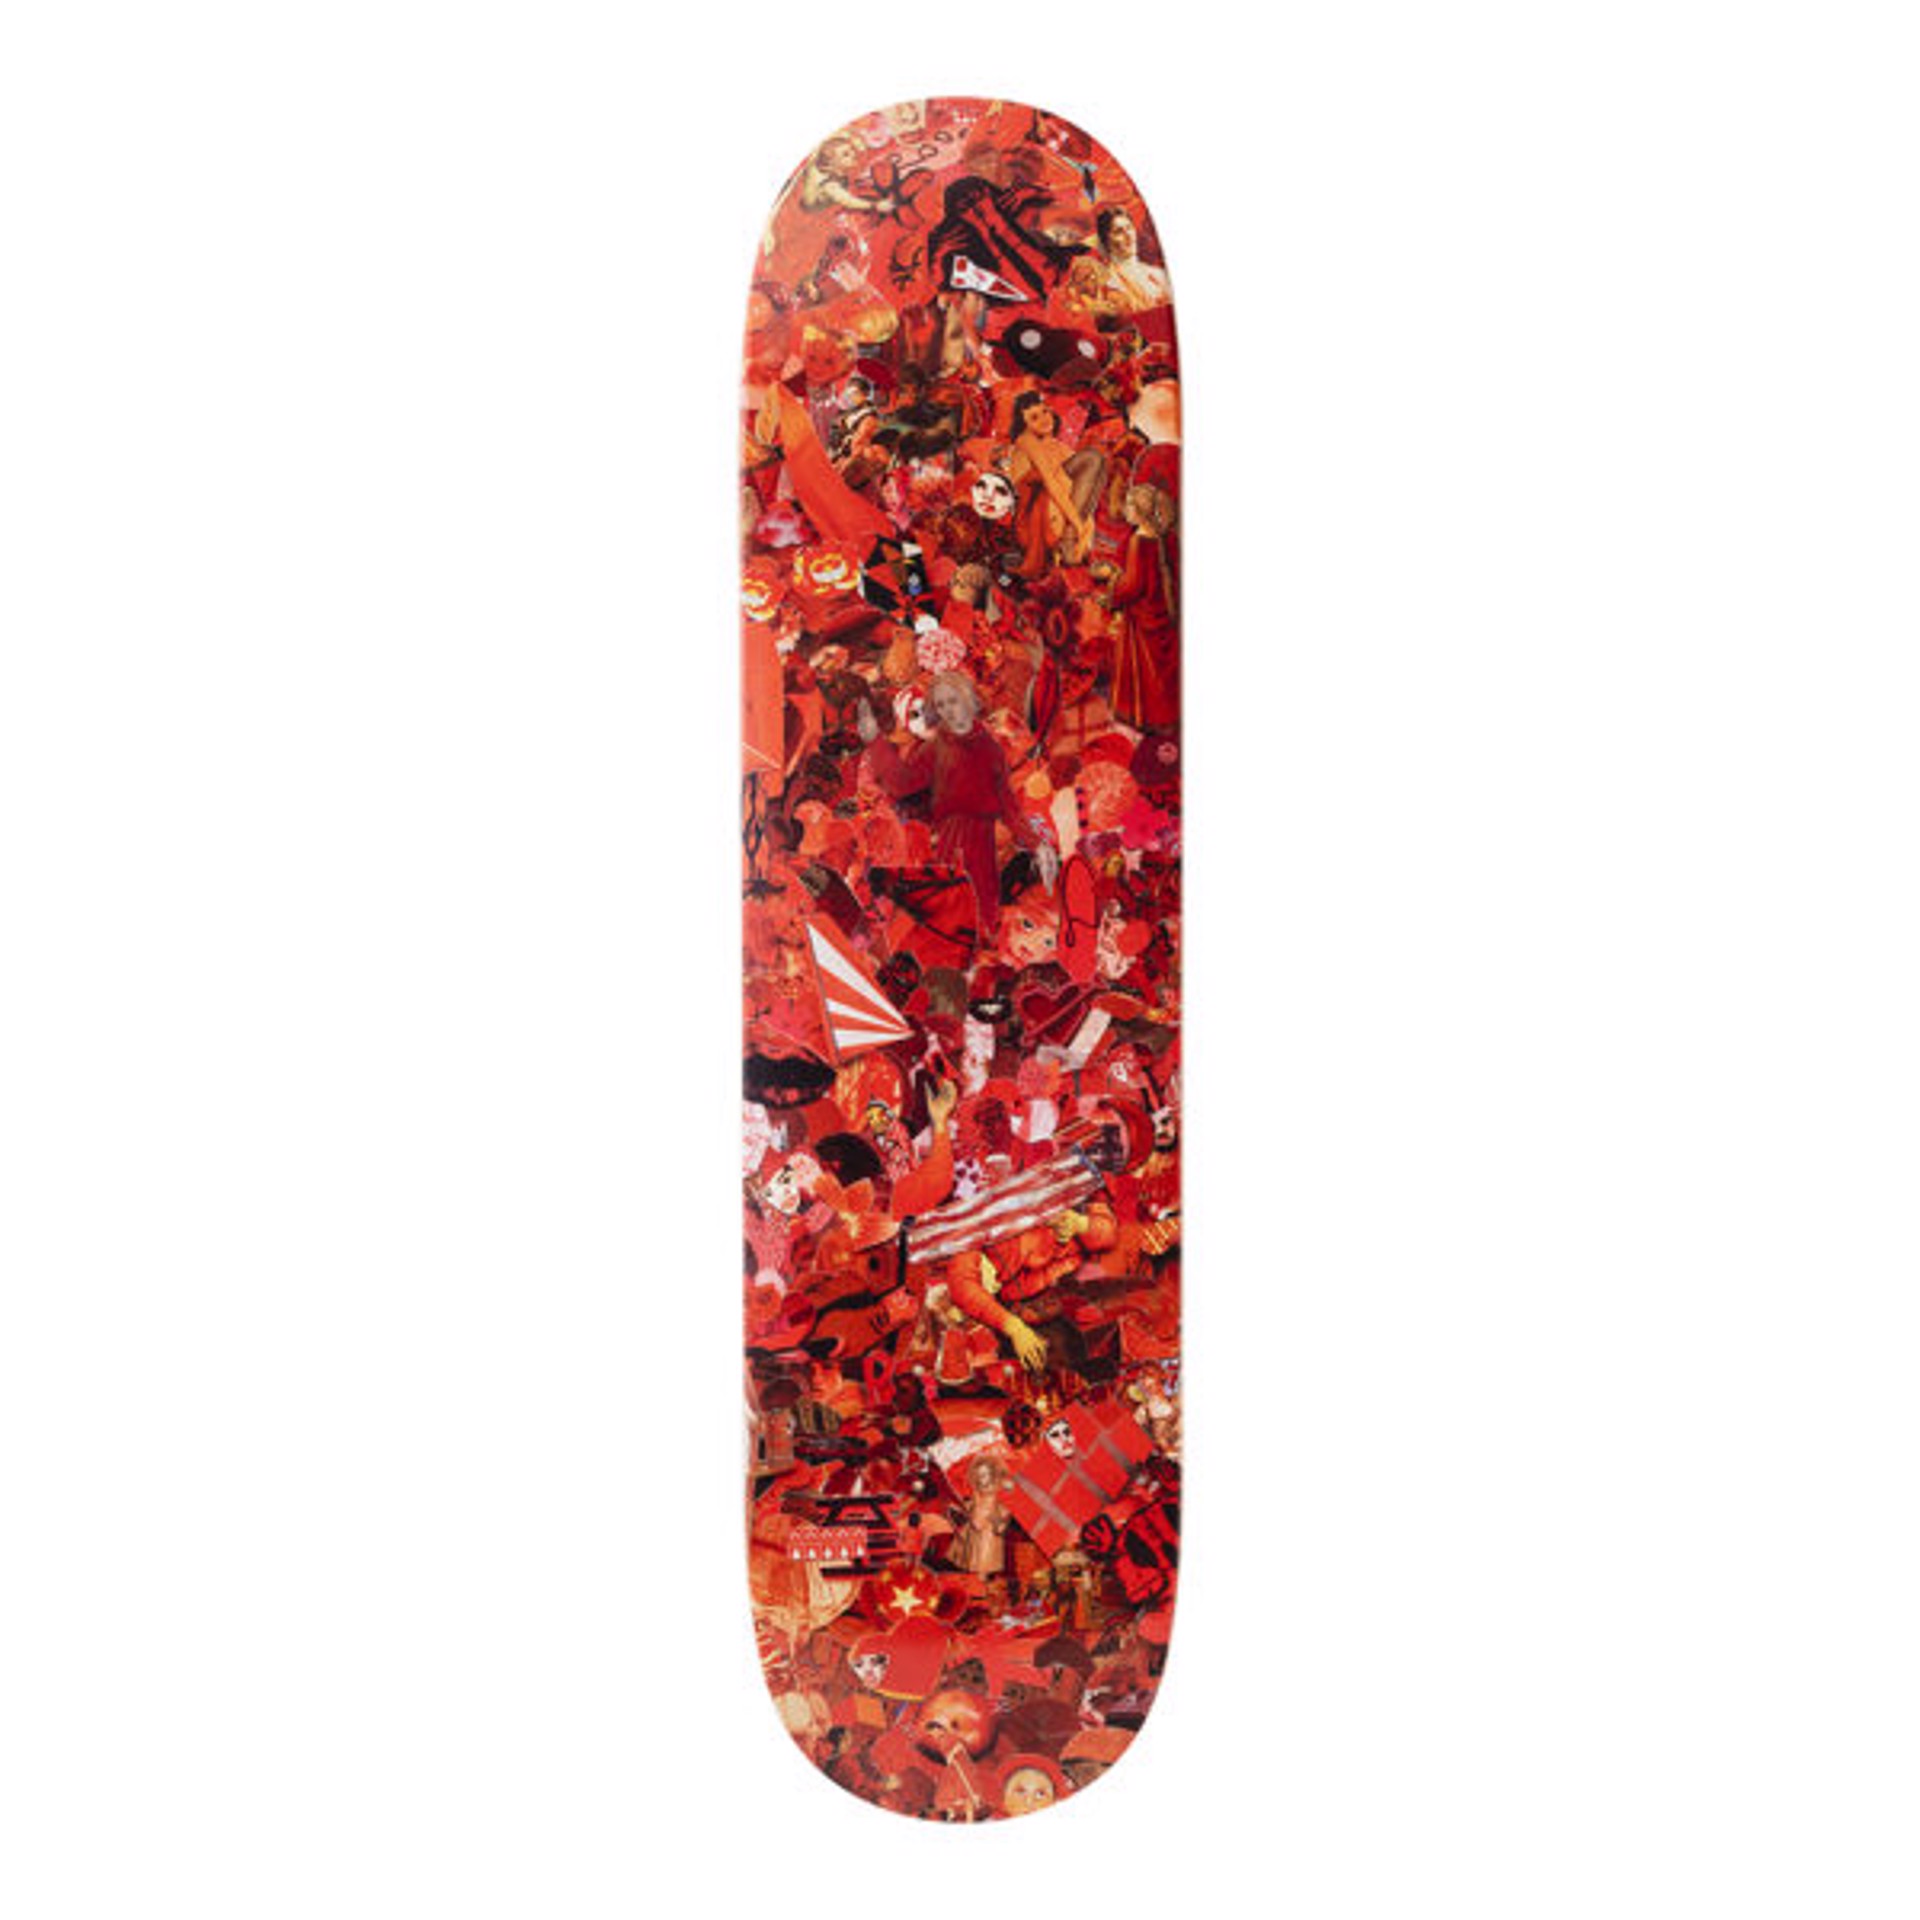 Eight Color Spectrum Skate Deck- Red by Vik Muniz